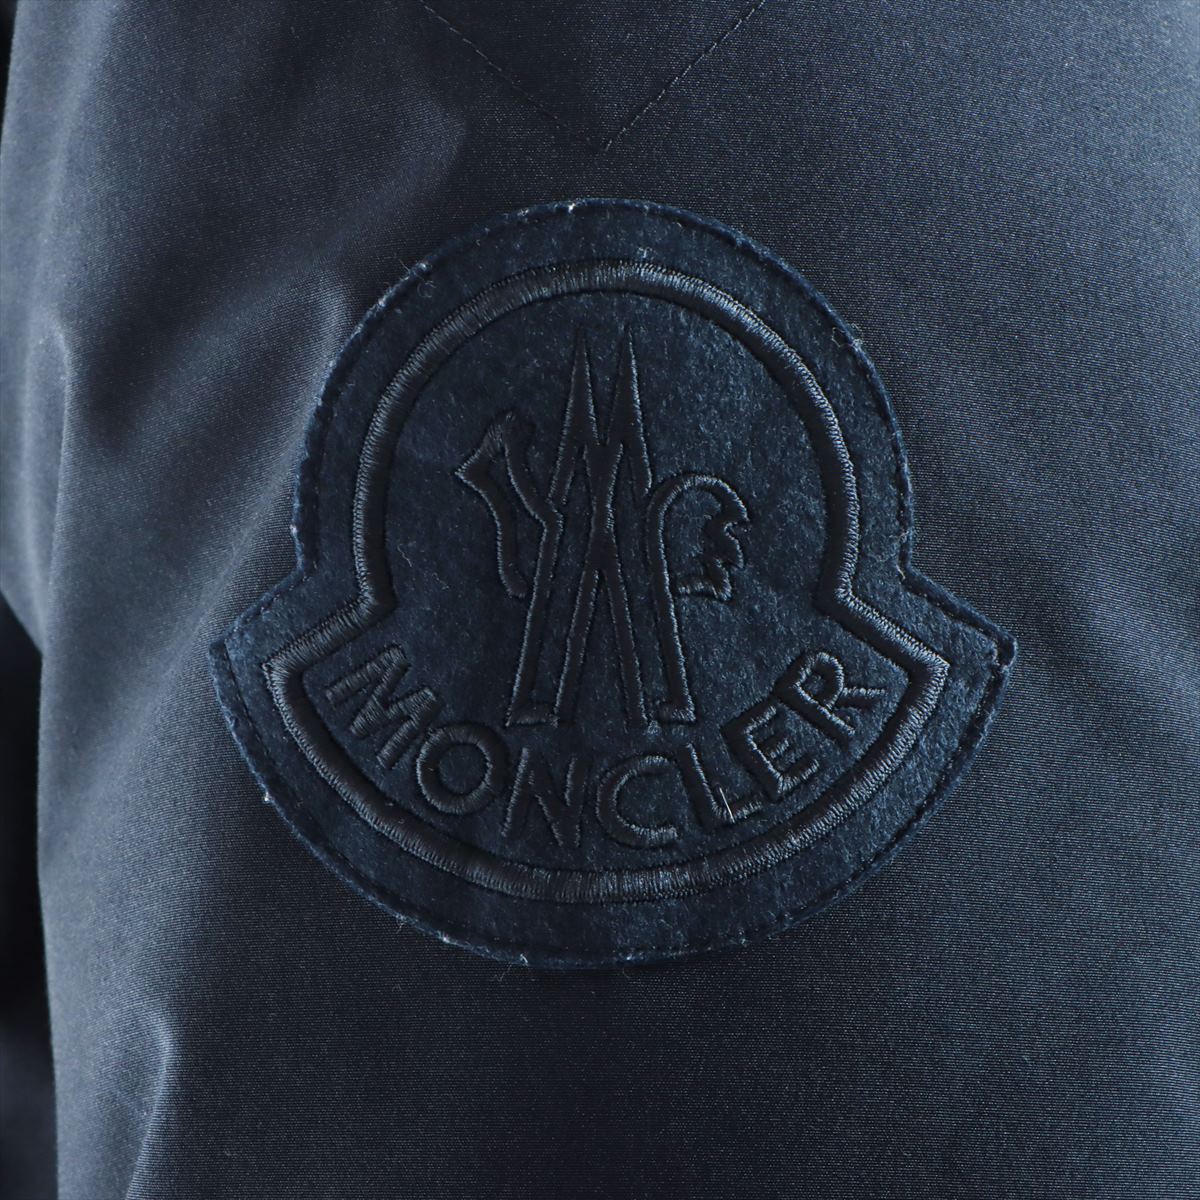 Moncler Genius 1952 19-year Cotton & polyester Down coat 1 Men's Navy blue  CHABRE